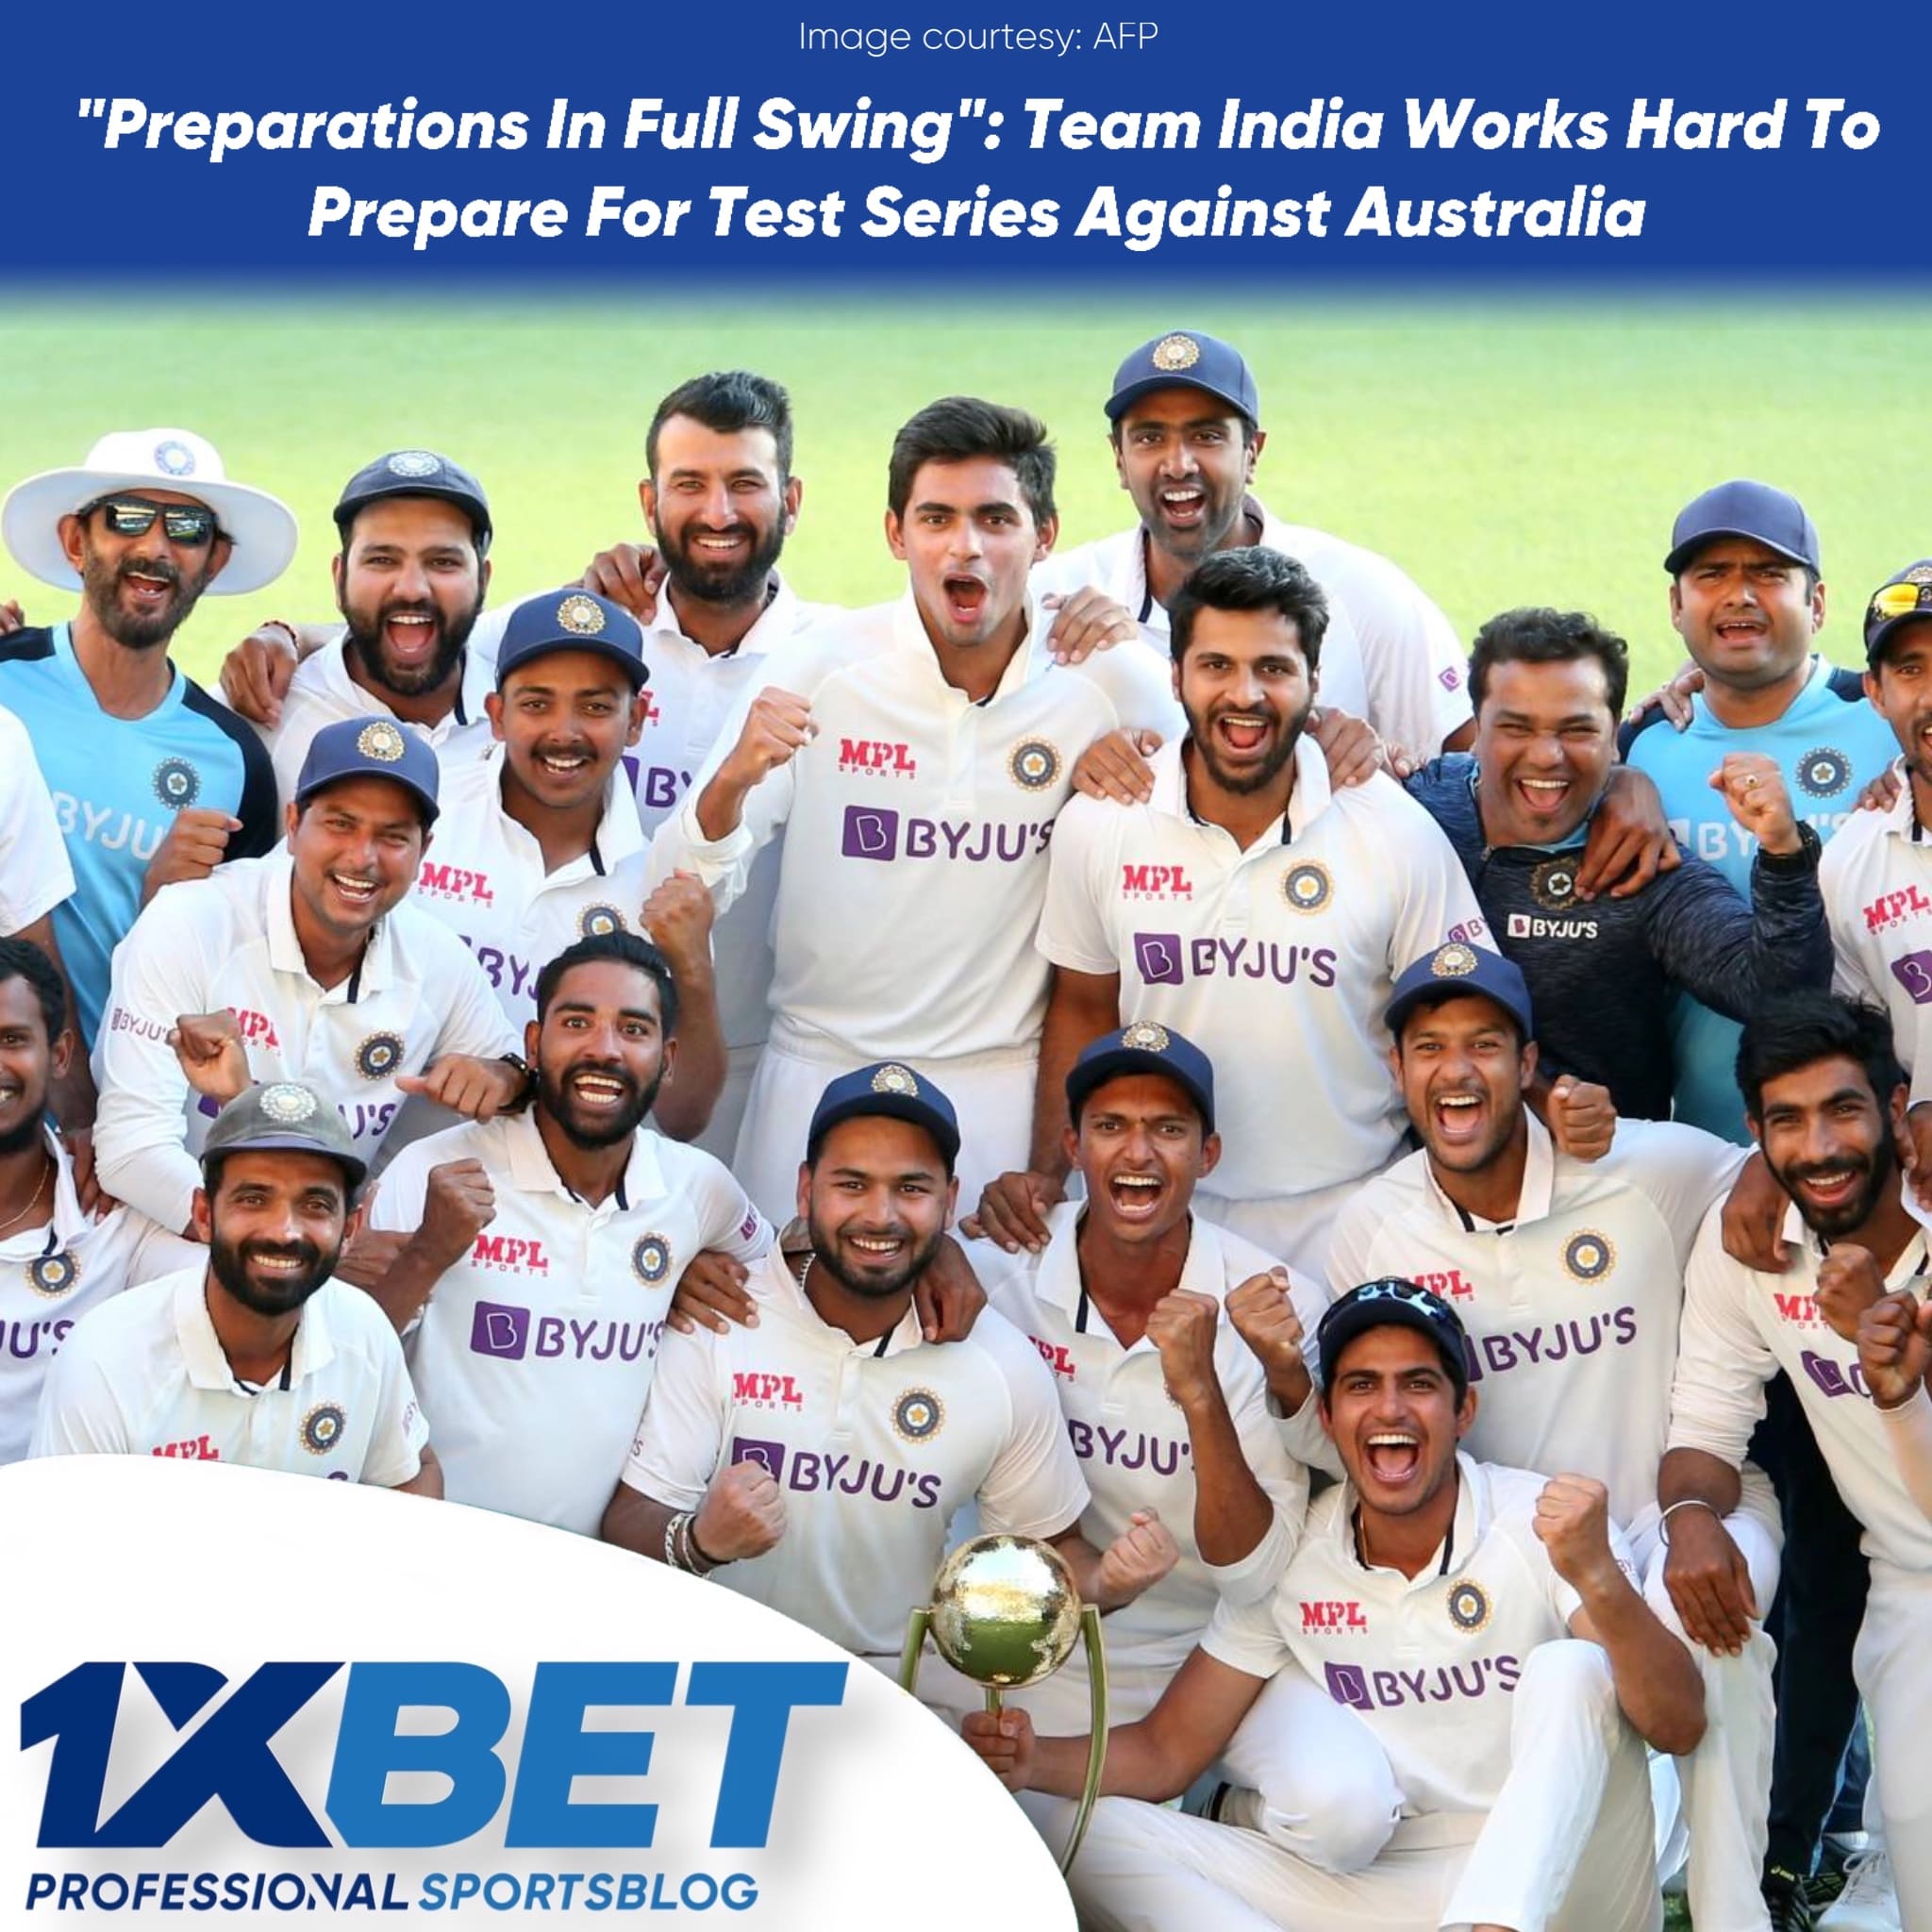 "Preparations In Full Swing": Team India Works Hard To Prepare For Test Series Against Australia